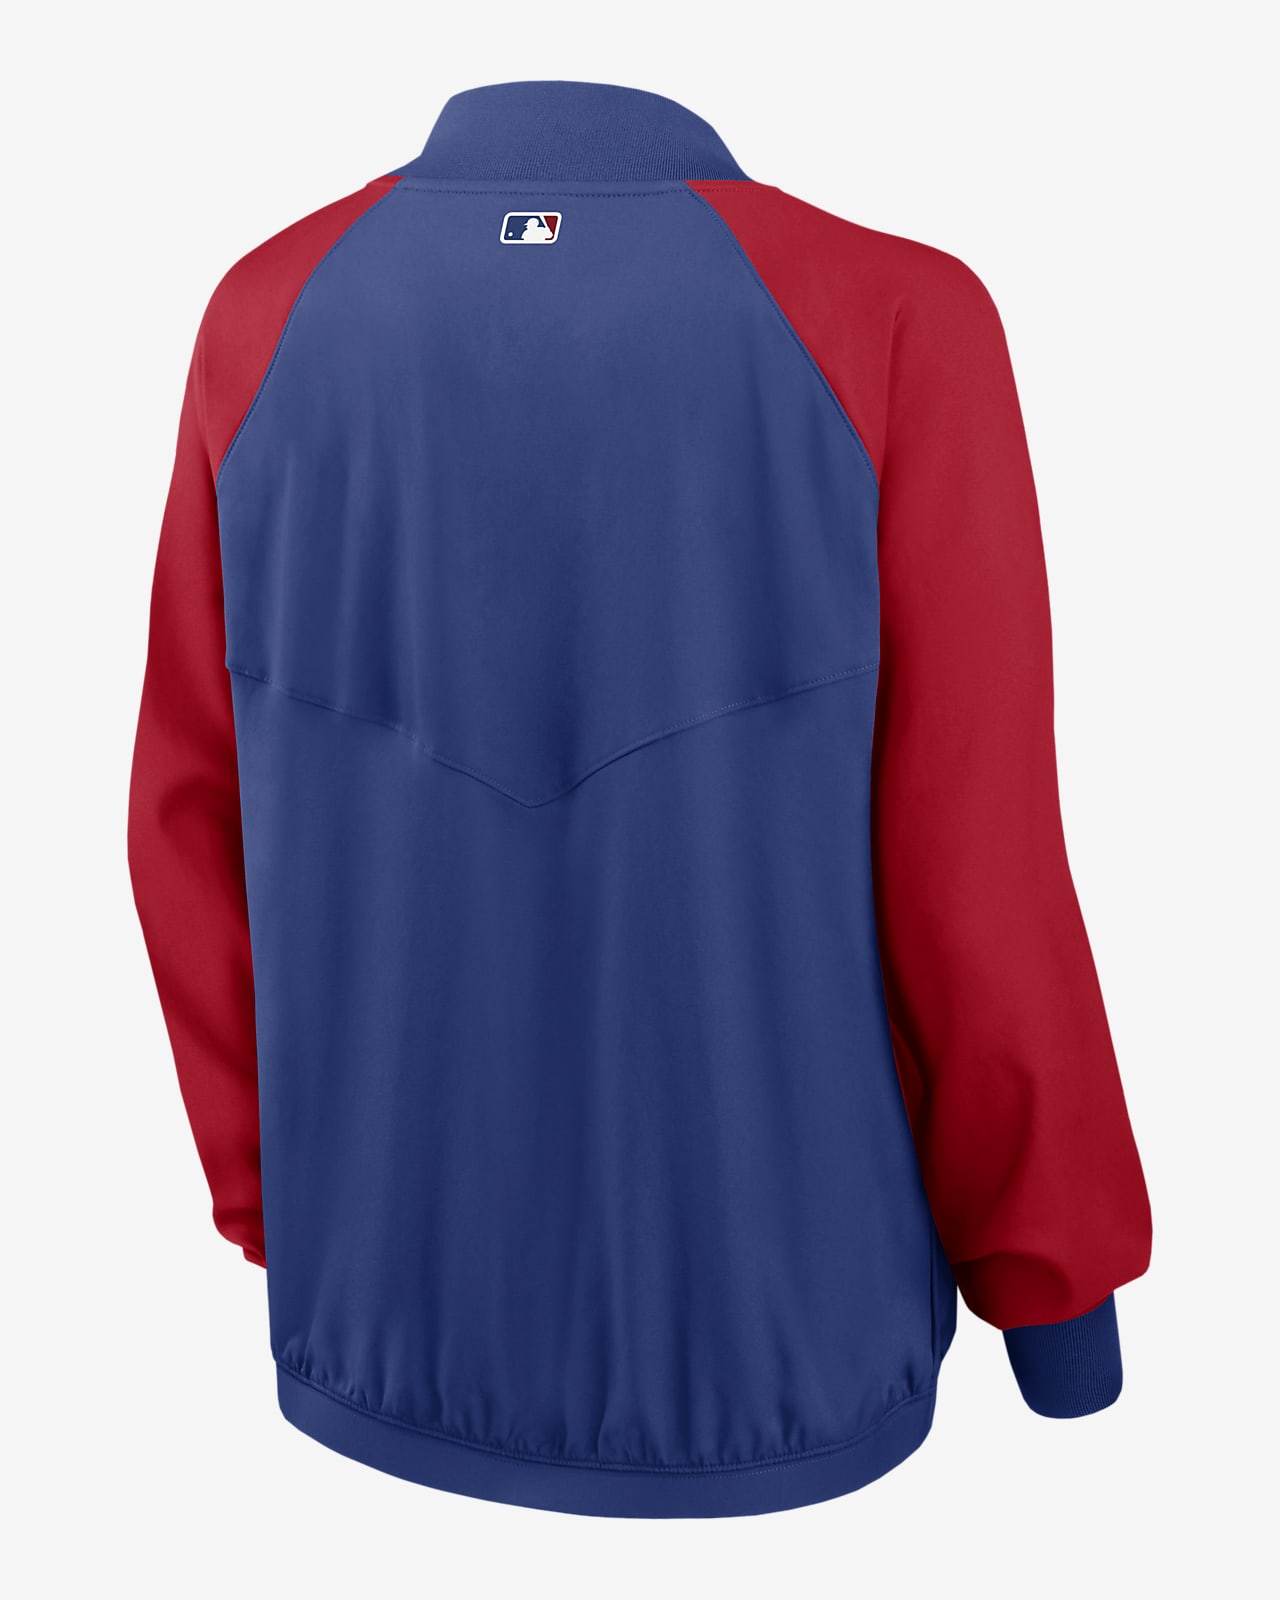 Nike Dri-FIT Team (MLB Chicago Cubs) Women's Full-Zip Jacket.